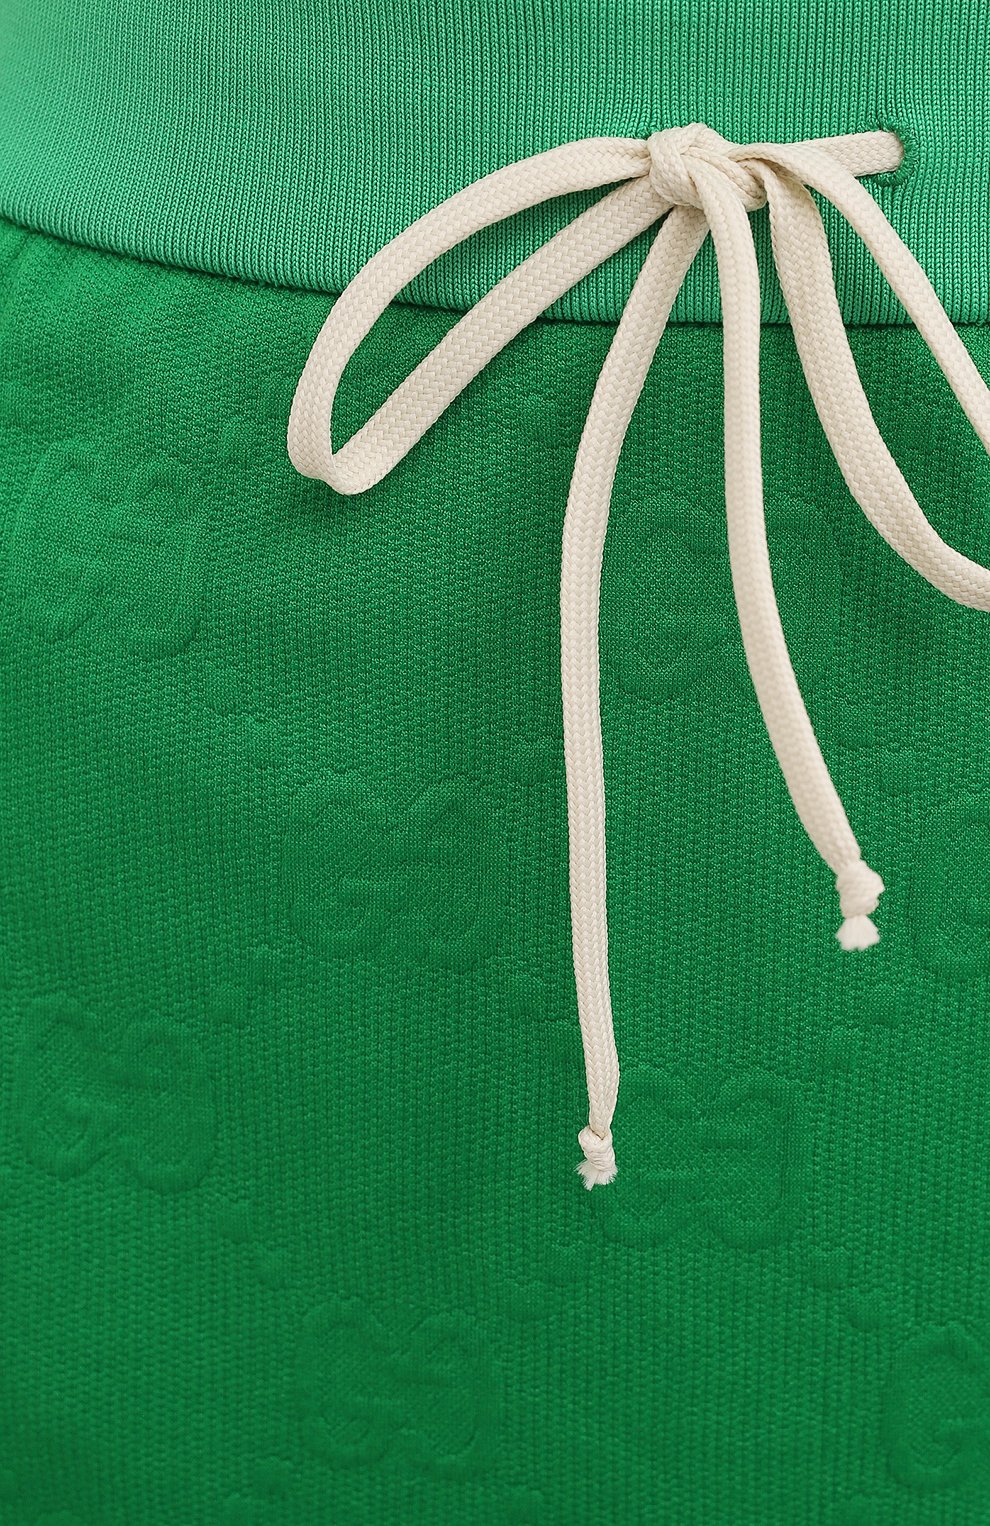 Женская юбка GUCCI зеленого цвета, арт. 655183/XJDEM | Фото 5 (Длина Ж (юбки, платья, шорты): Мини; Материал внешний: Синтетический материал; Женское Кросс-КТ: Юбка-одежда; Стили: Спорт-шик)